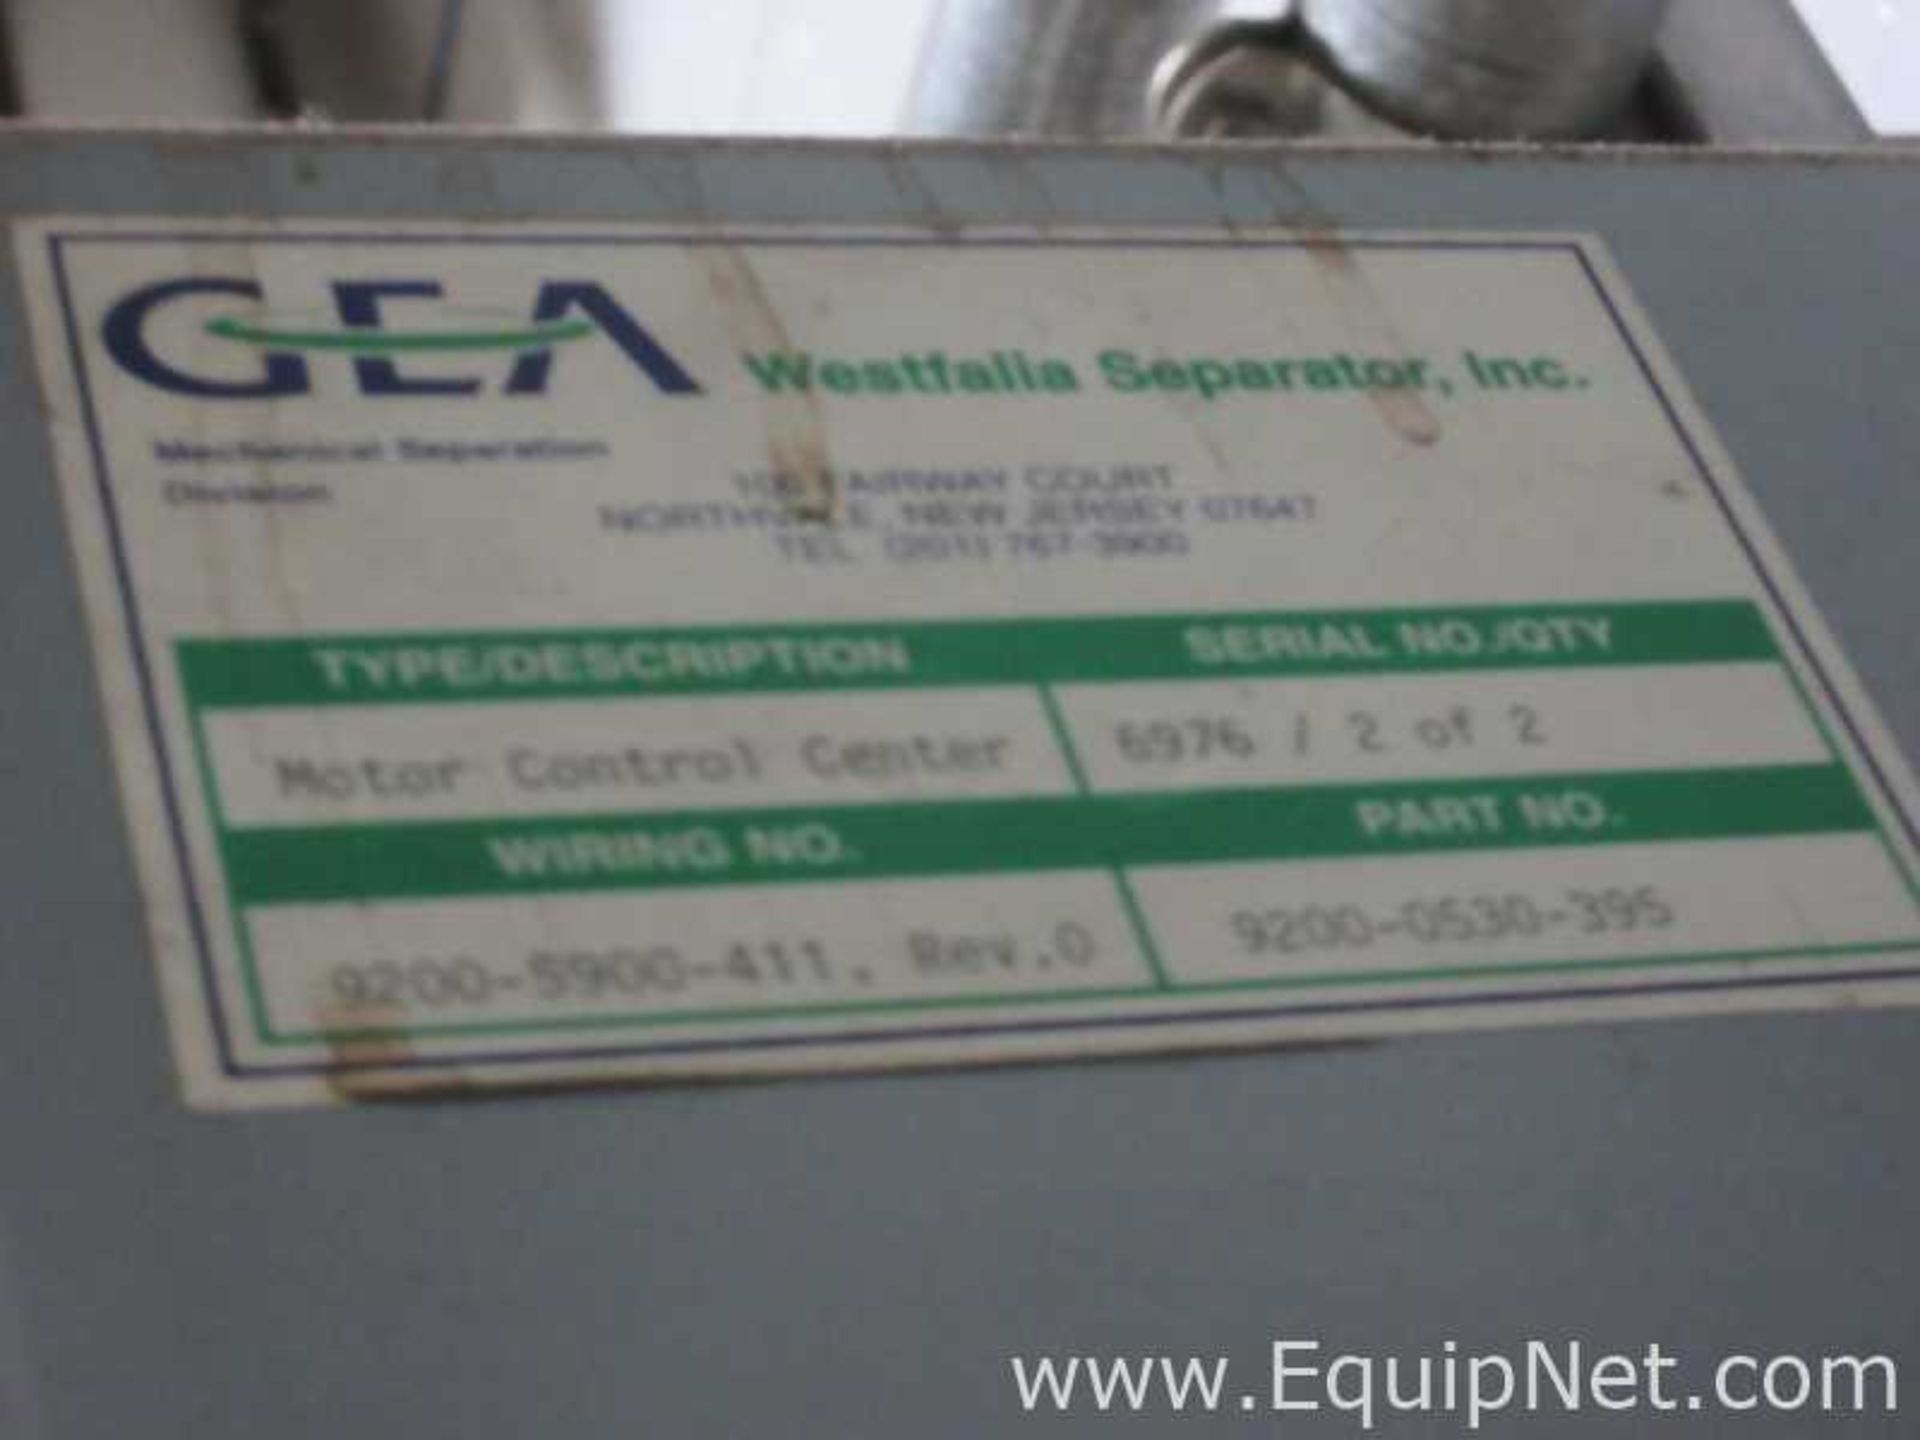 GEA Westfalia Separator Group GMASTER CF 4000 Stainless Steel Decanter Centrifuge - Image 16 of 35